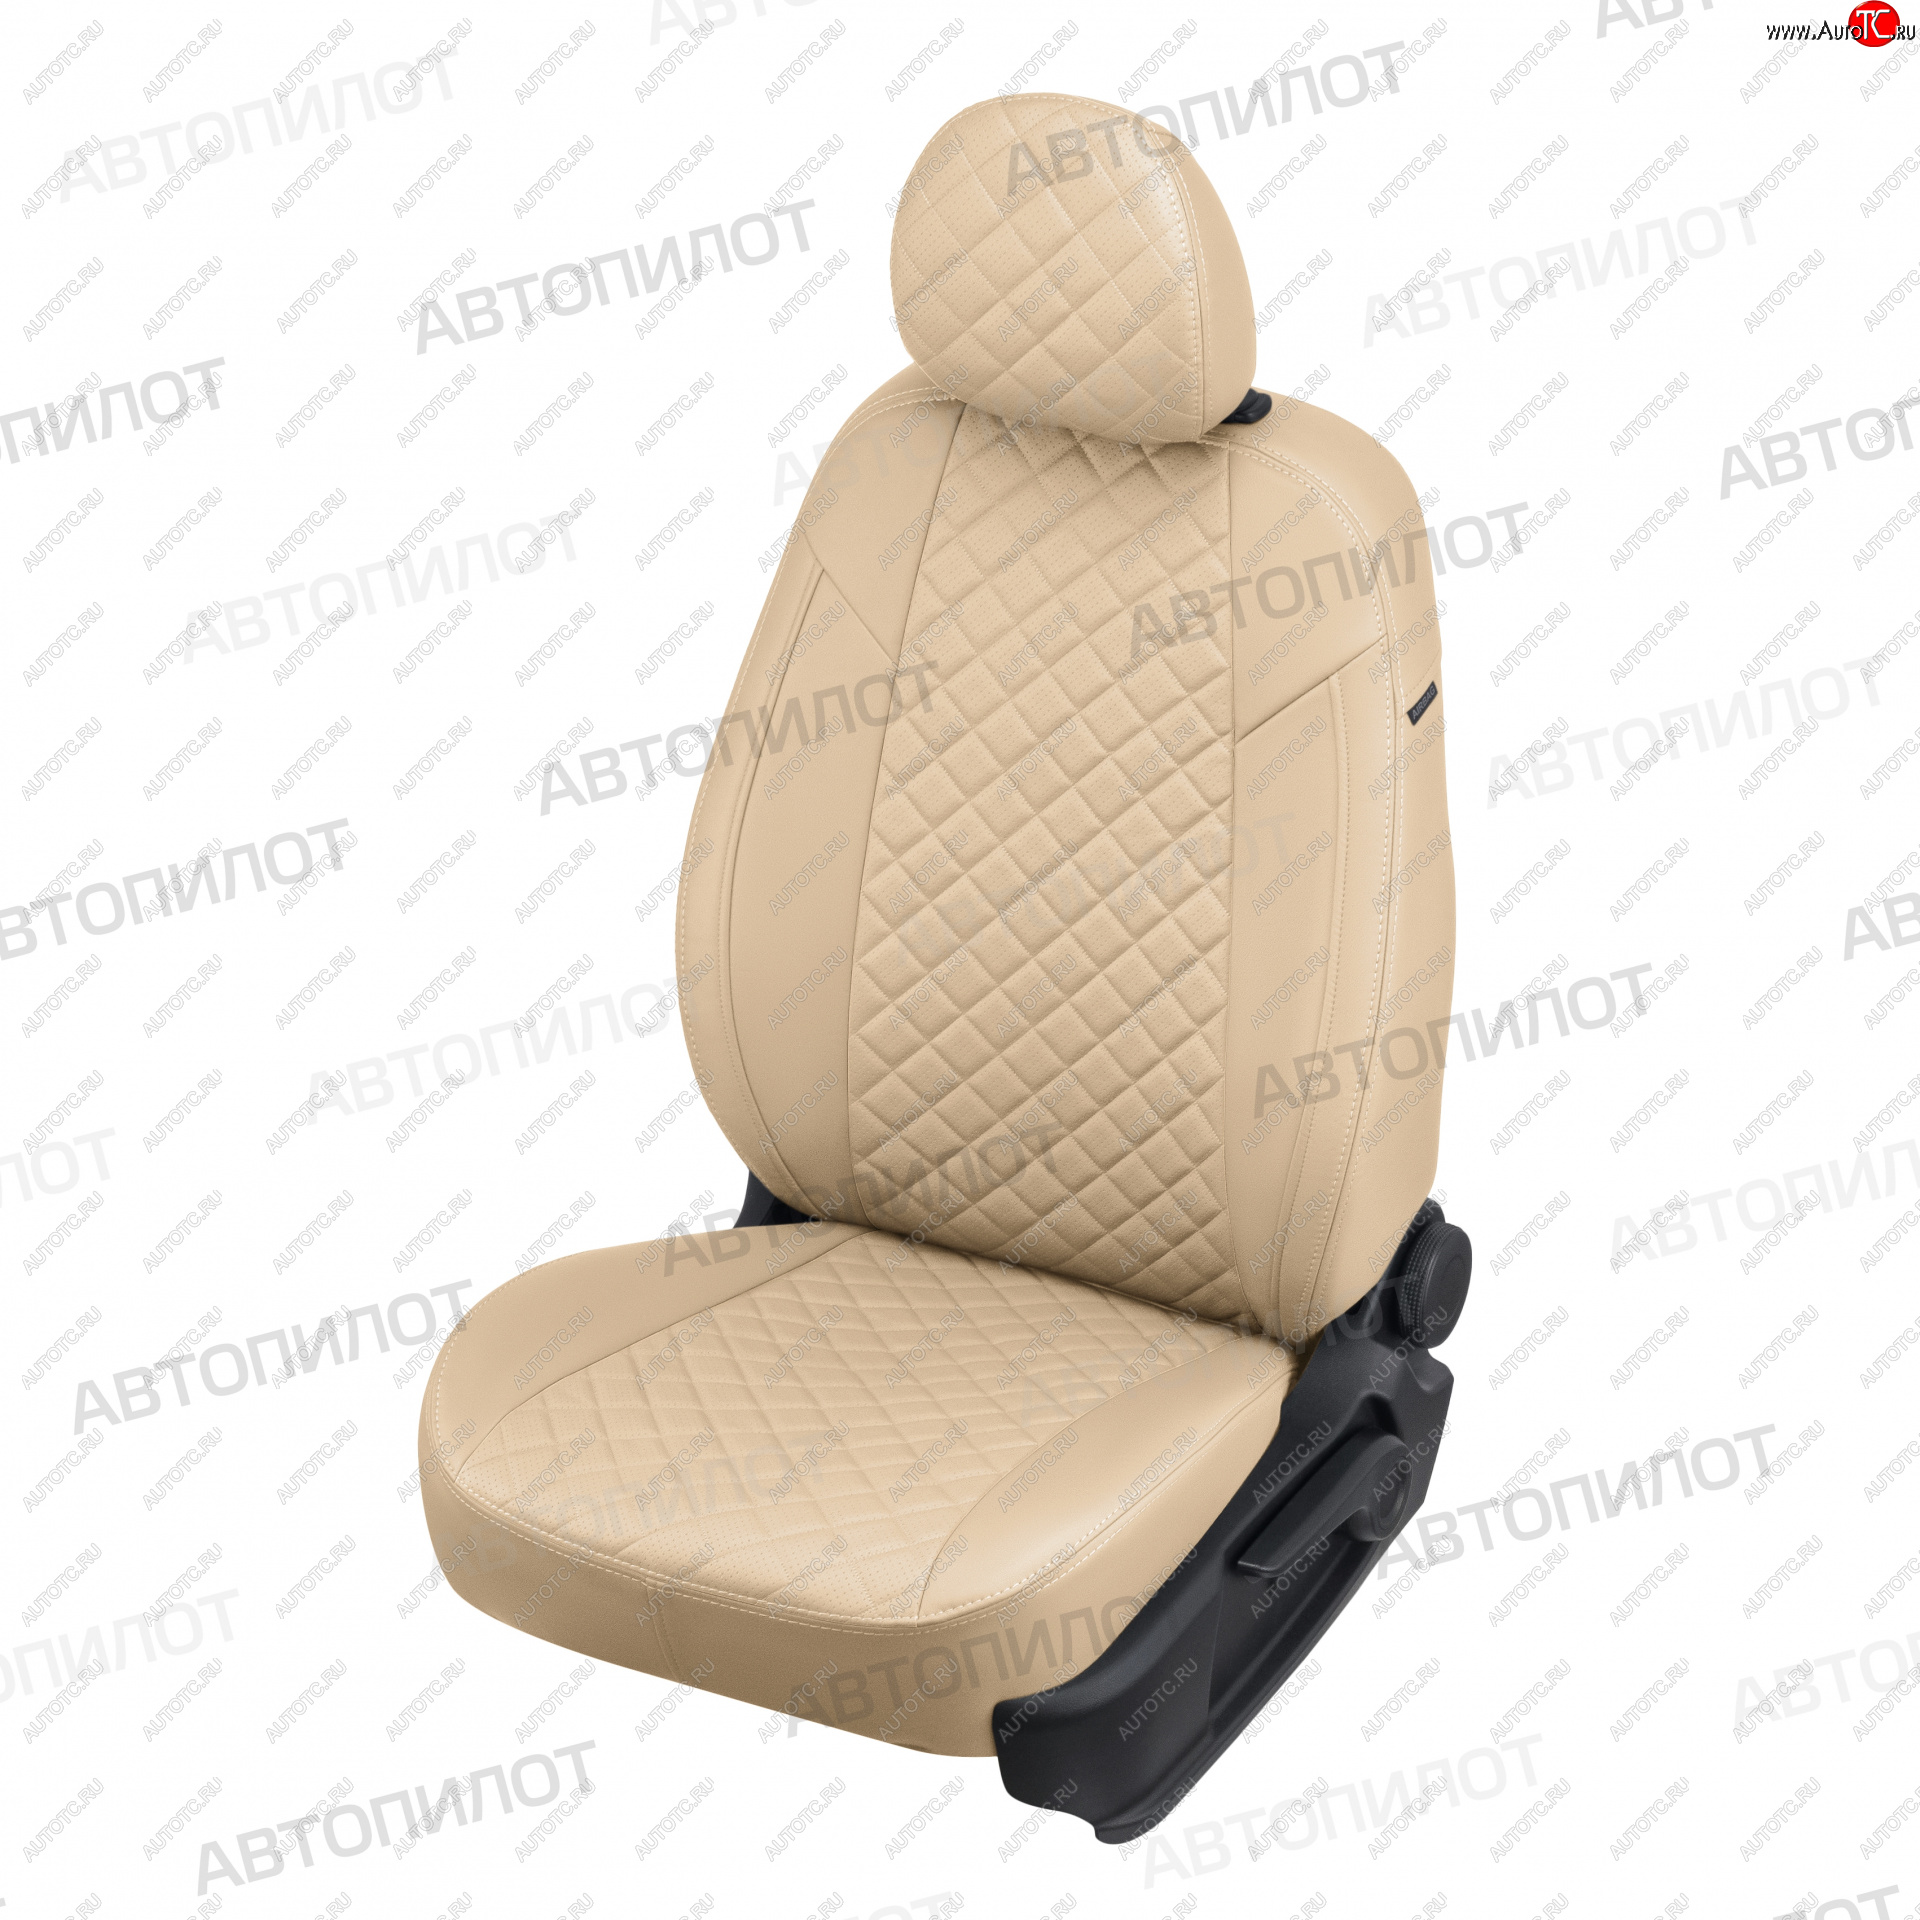 13 999 р. Чехлы сидений (экокожа) Автопилот Ромб  Hyundai Sonata  YF (2009-2014) (бежевый)